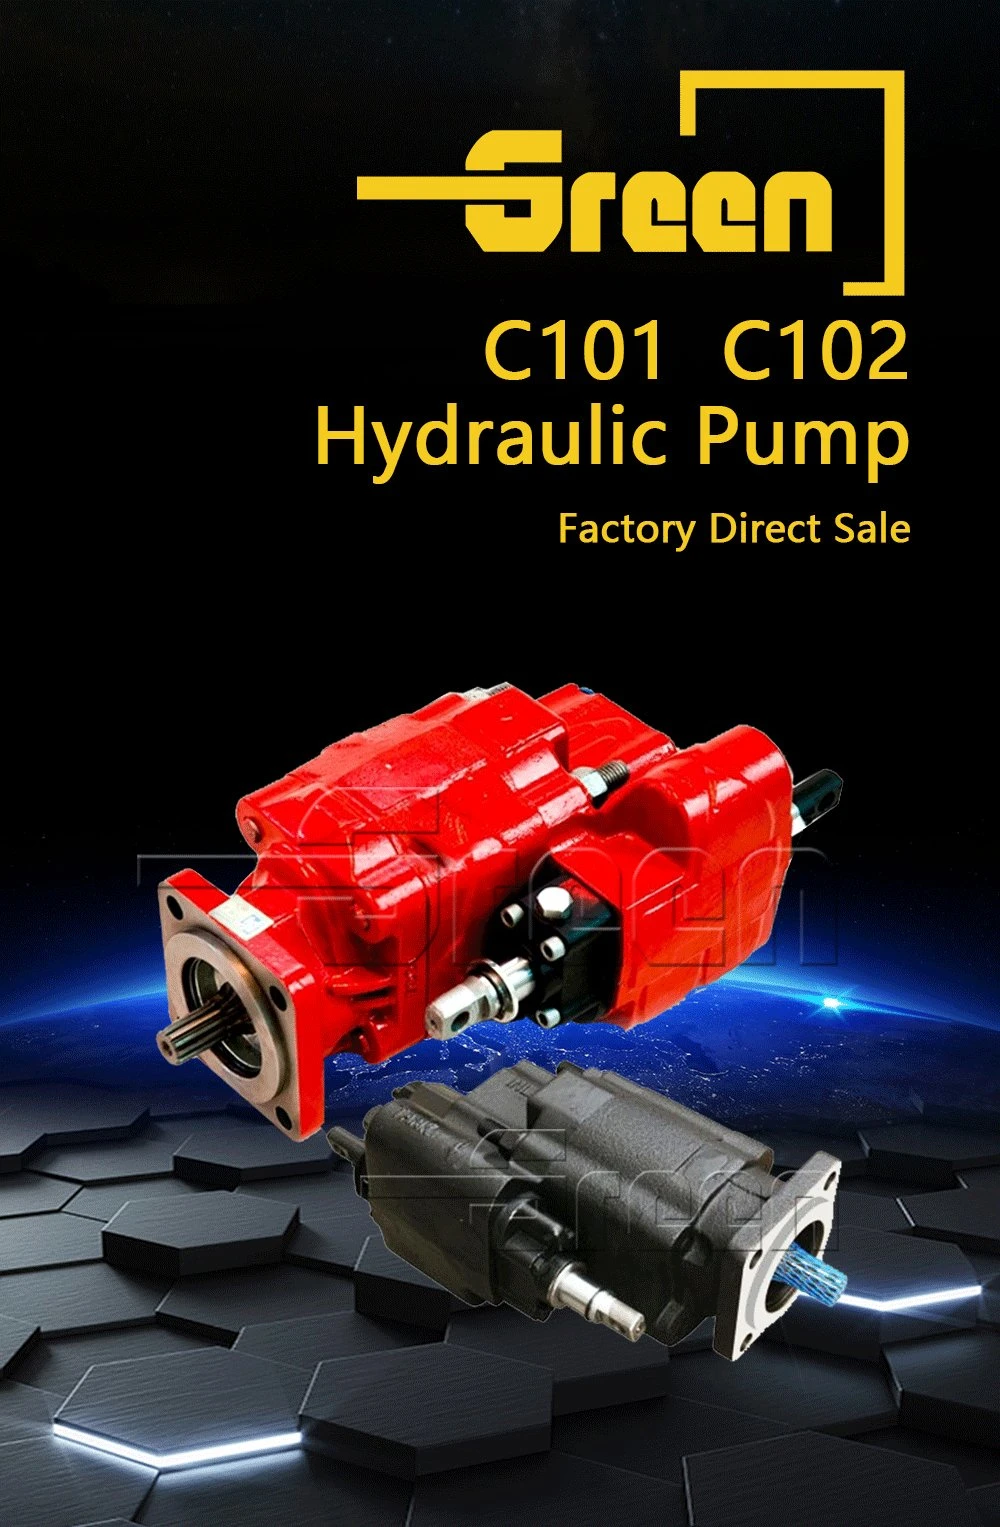 Parker Hydraulic Gear Pump C101 C102 with Manual Control